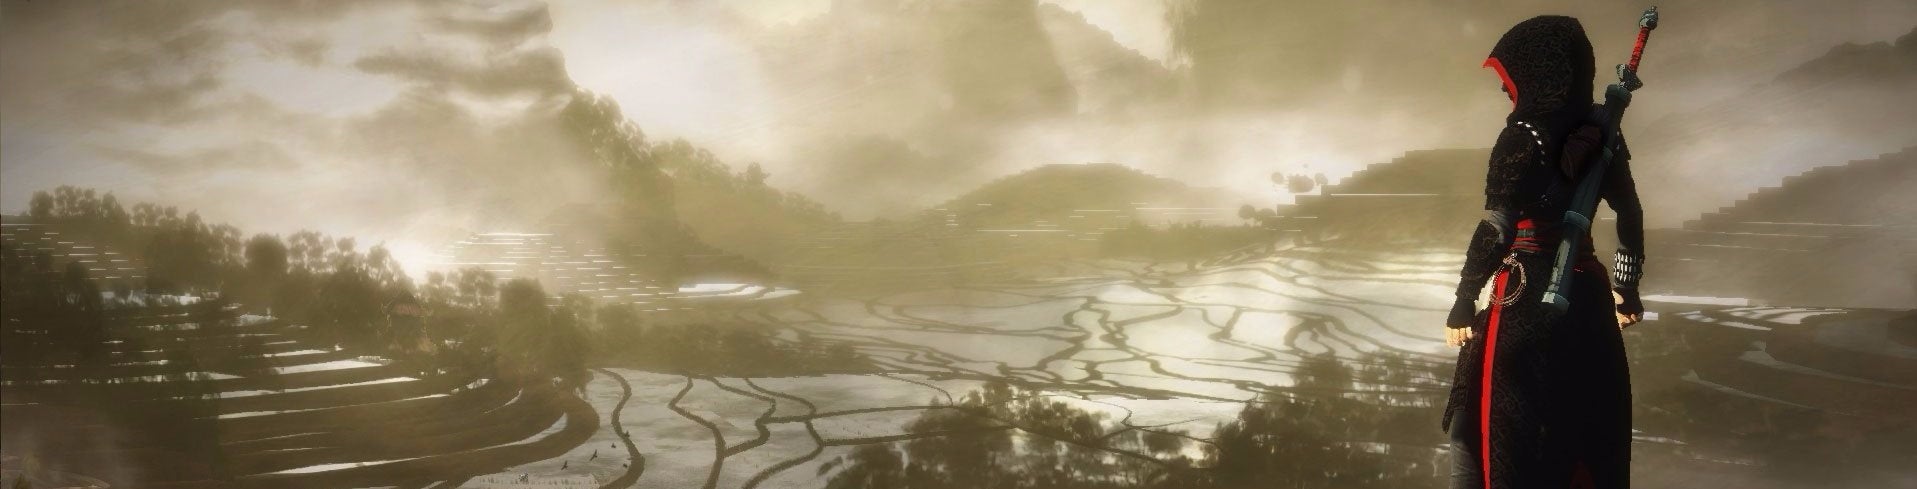 Imagem para Assassin's Creed Chronicles: China - Análise